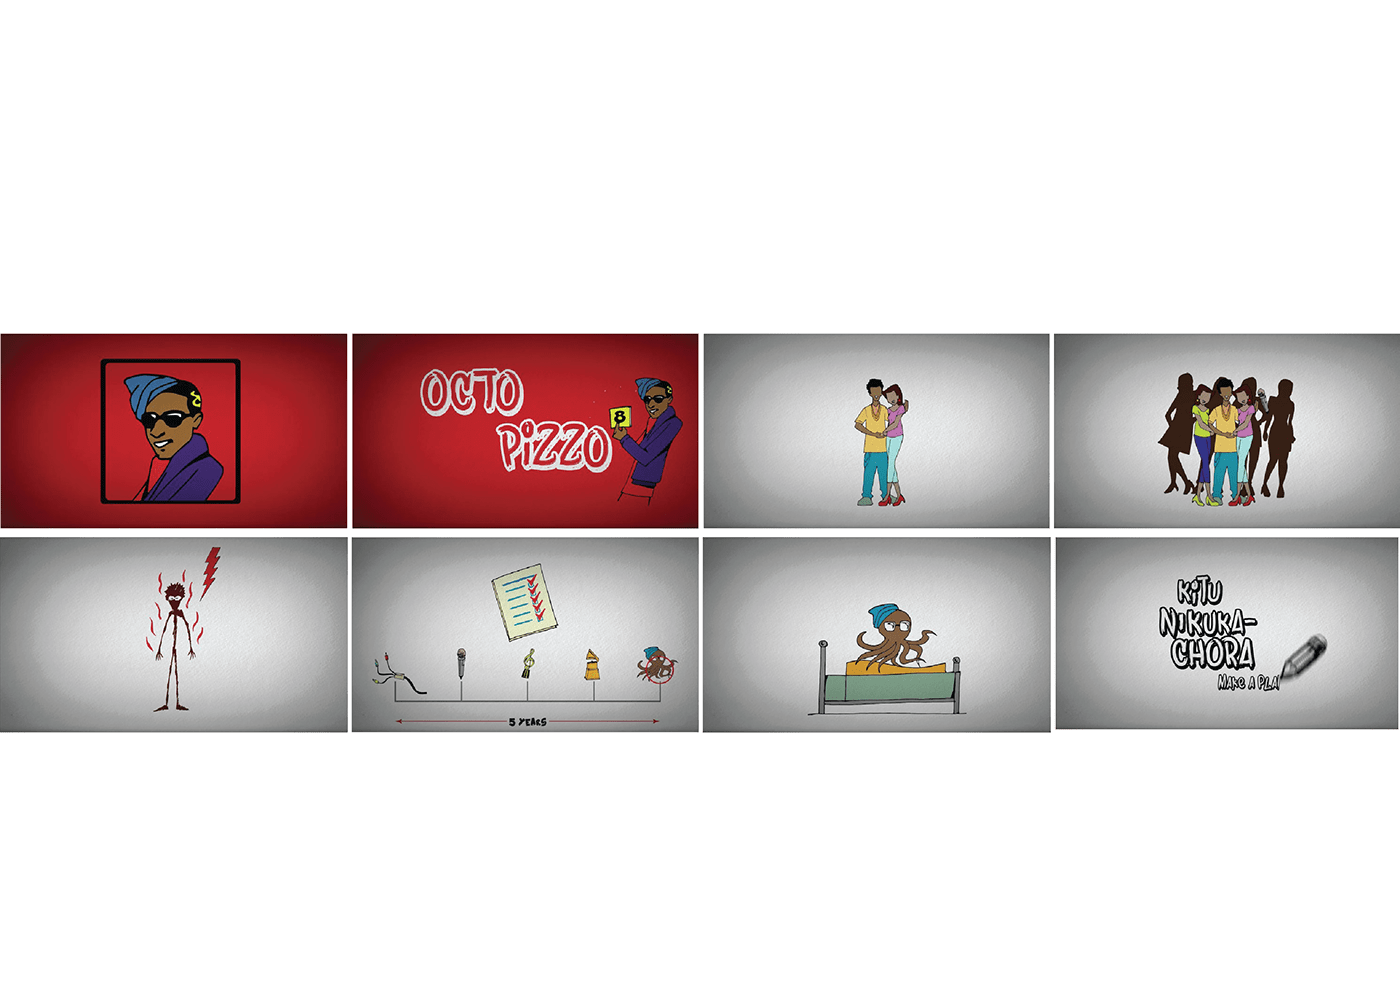 animation  graphics charcter design concept art Social media post kenya nairobi youth south africa nigeria